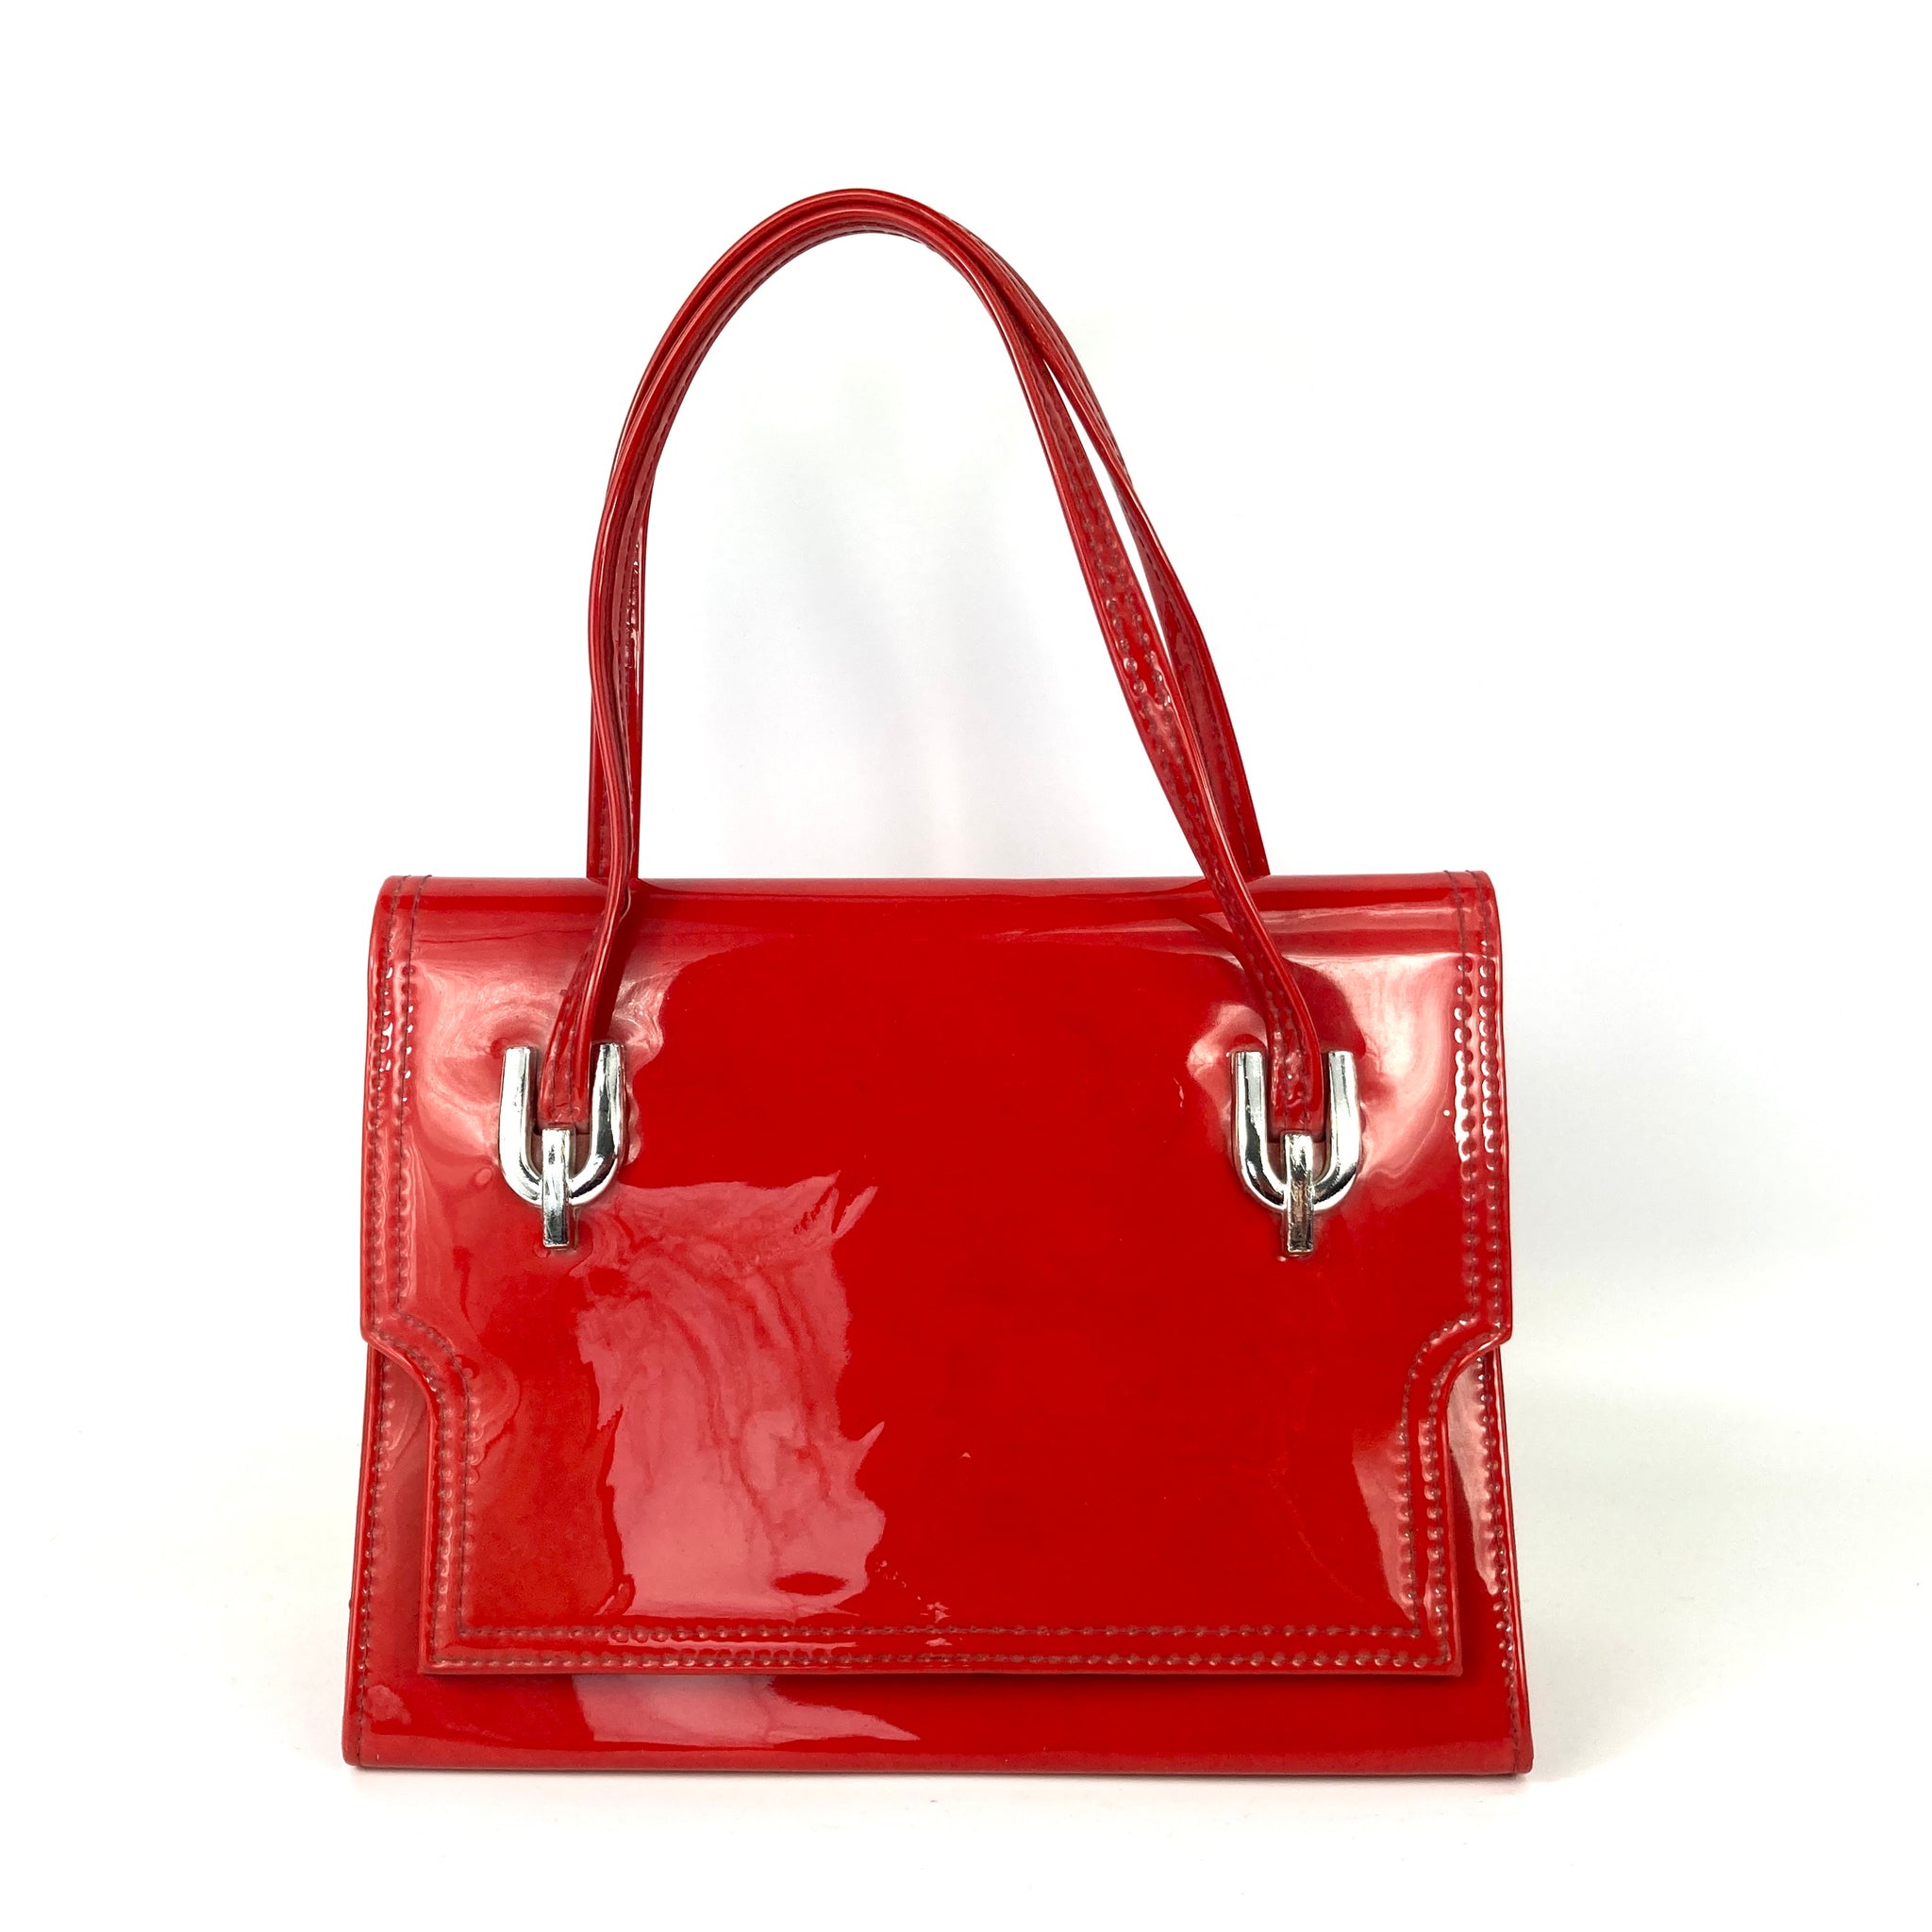 Vintage 1960s/70s Lipstick Red Patent Handbag by Freedex Made in